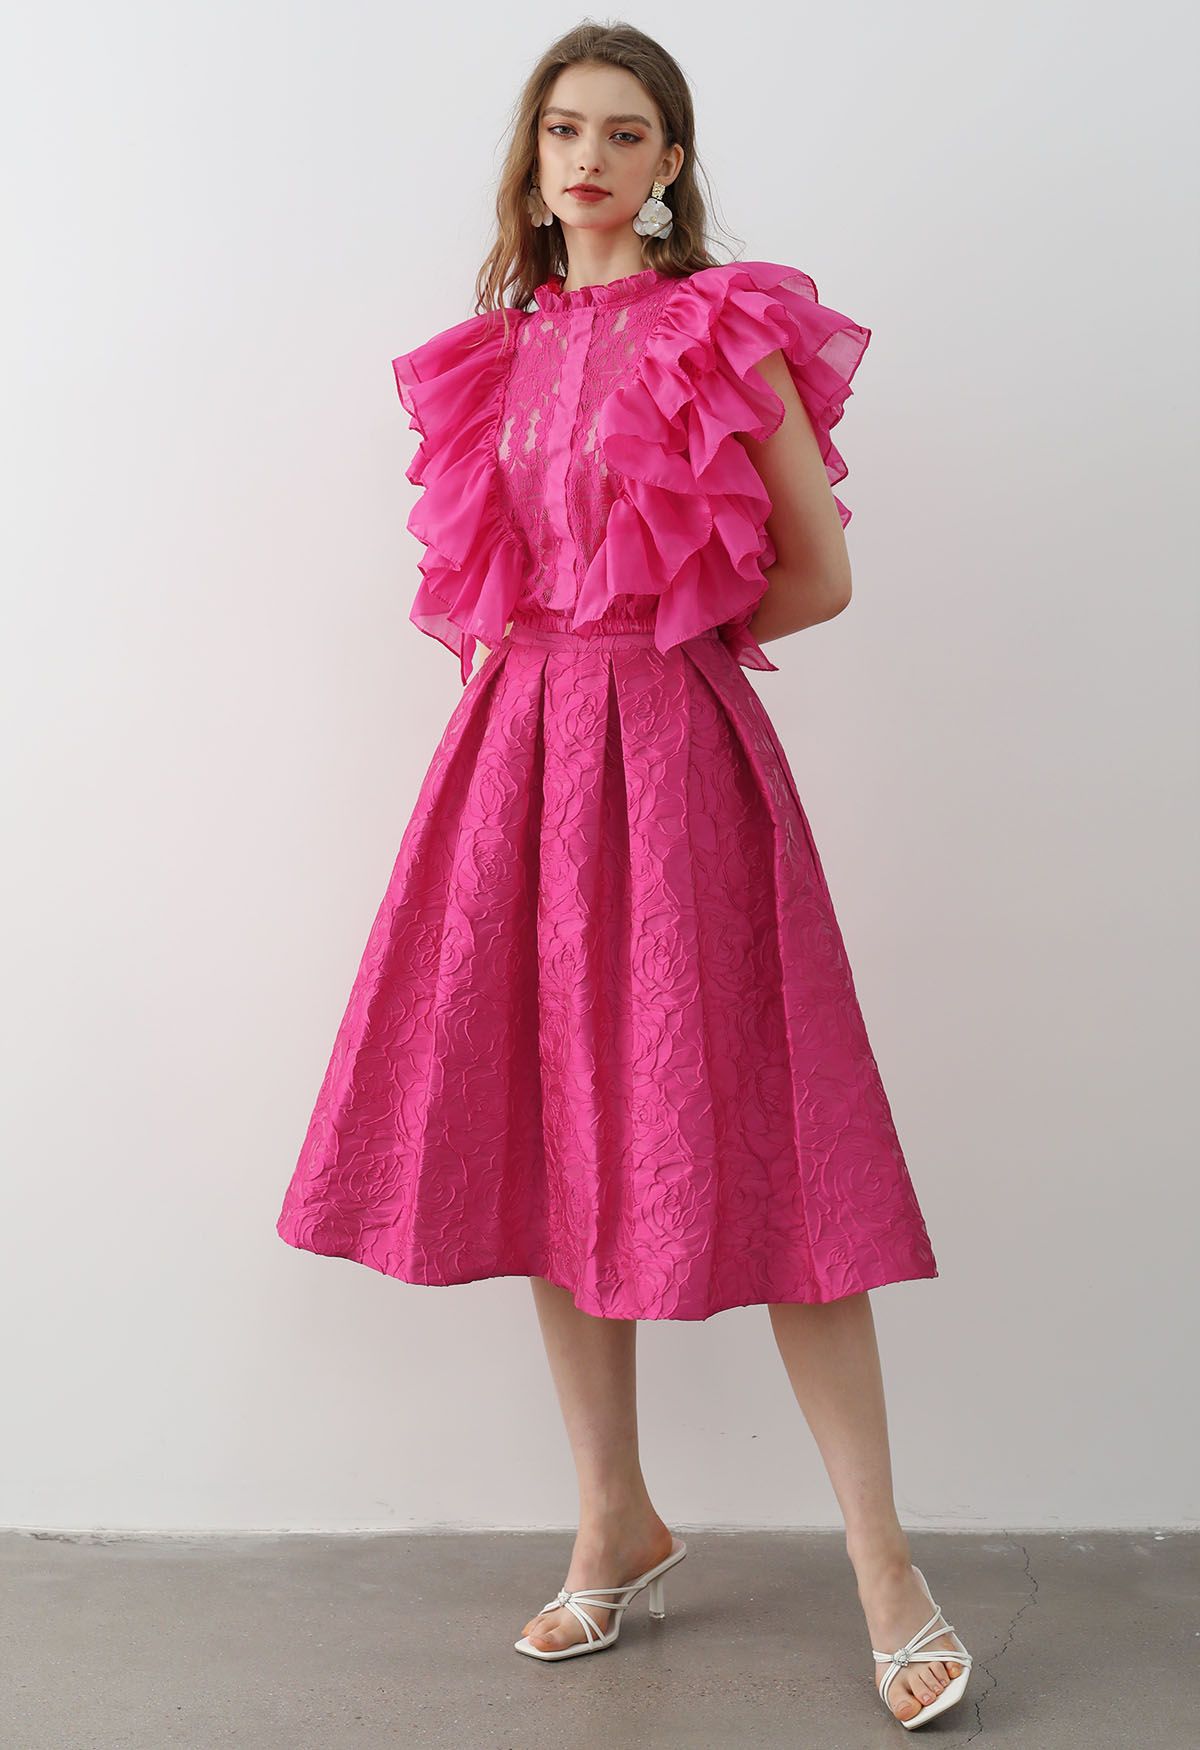 Hot Pink Roses Jacquard Side Pocket Pleated Midi Skirt